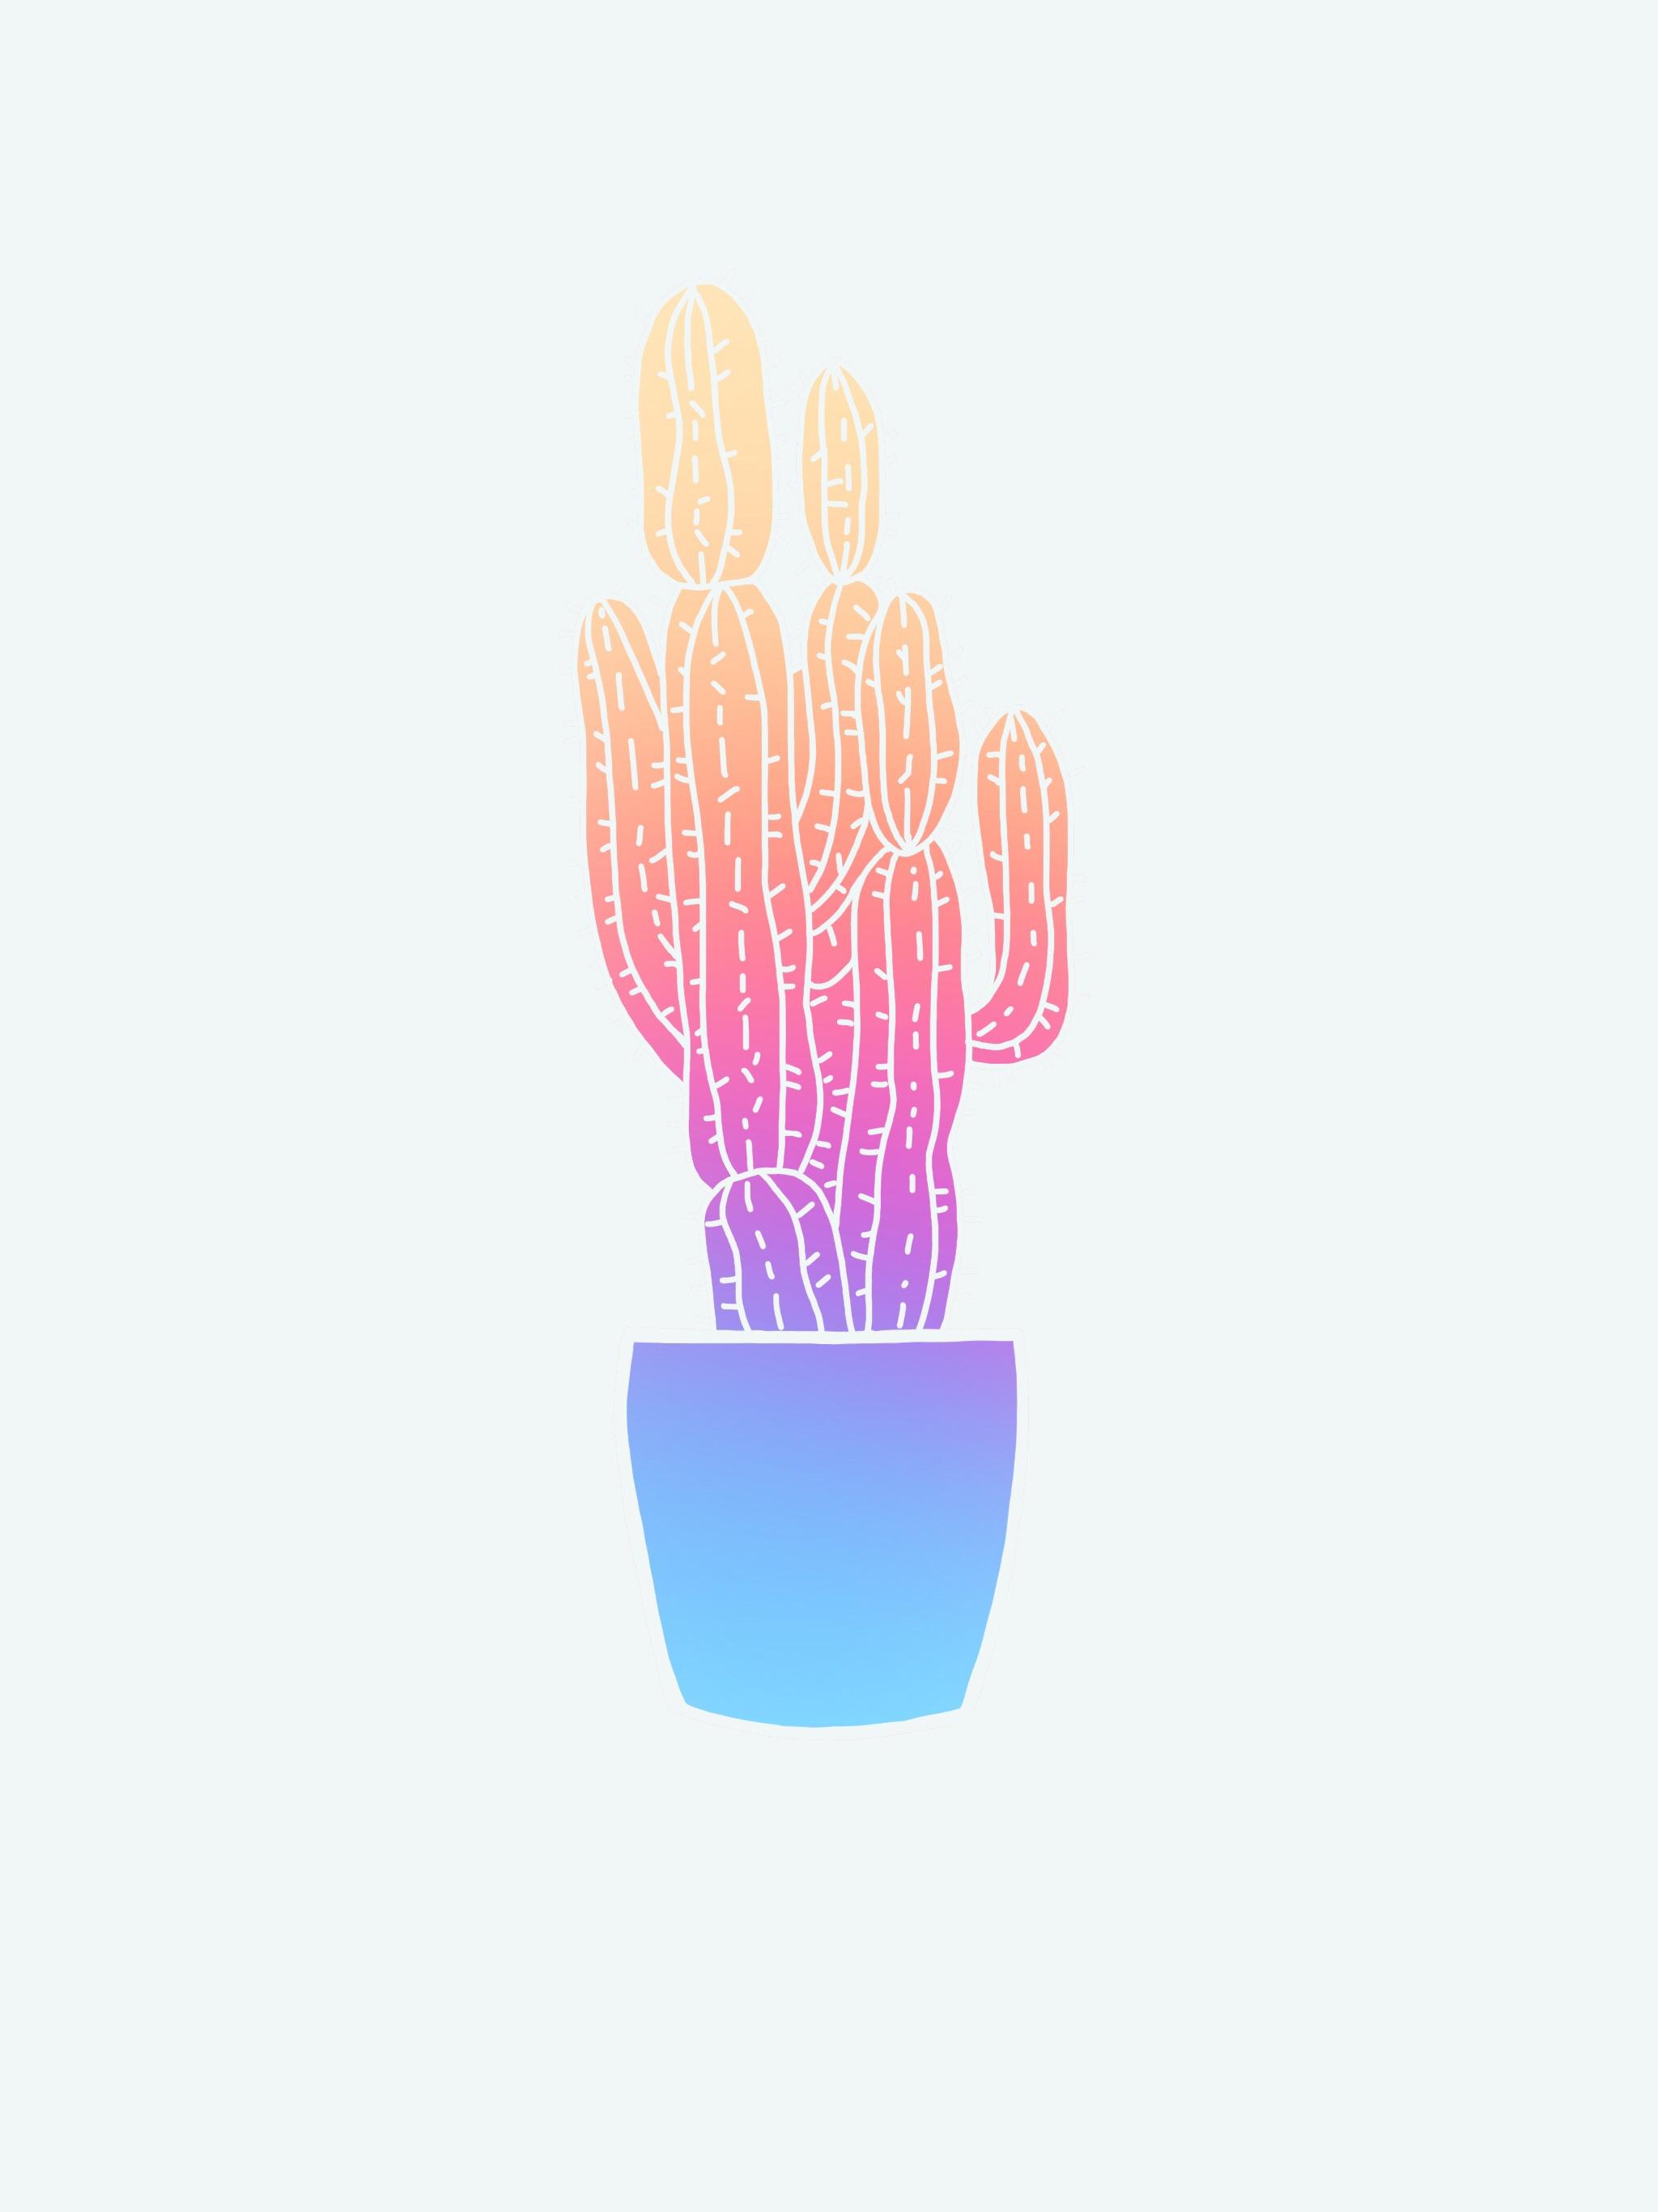 Simple Cactus Drawing. Explore